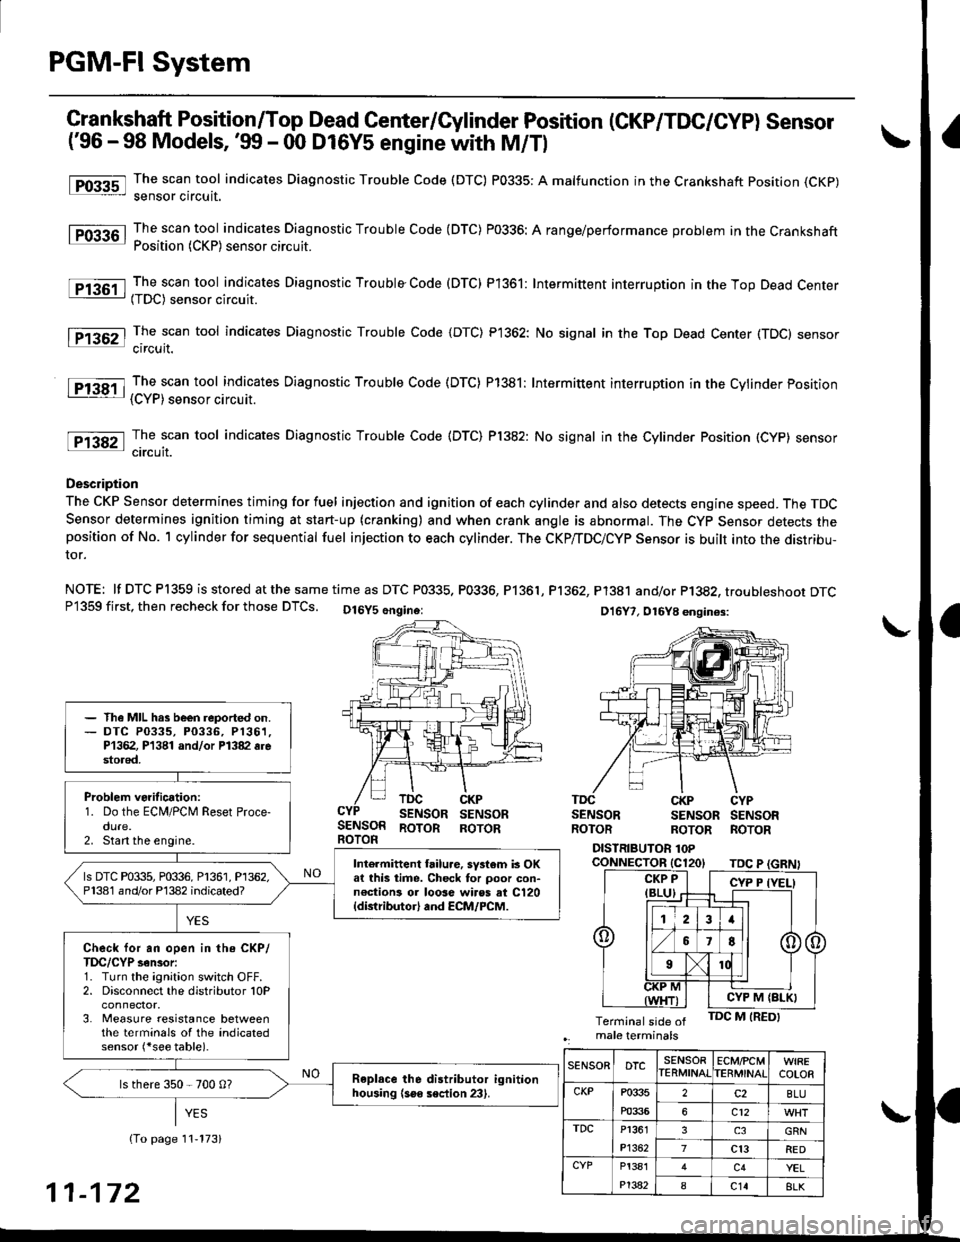 HONDA CIVIC 1996 6.G Workshop Manual PGM-FI System
tFos3sl
tFffi6l
tPr361 I
fPfi62l
fFr38il
tF13s2-l
Crankshaft Position/Top Dead Genter/Gylinder Position (CKP/TDC/CYP) Sensor
(96 - 98 Models, !n - 00 D16Y5 engine with M/Tl
The scan to